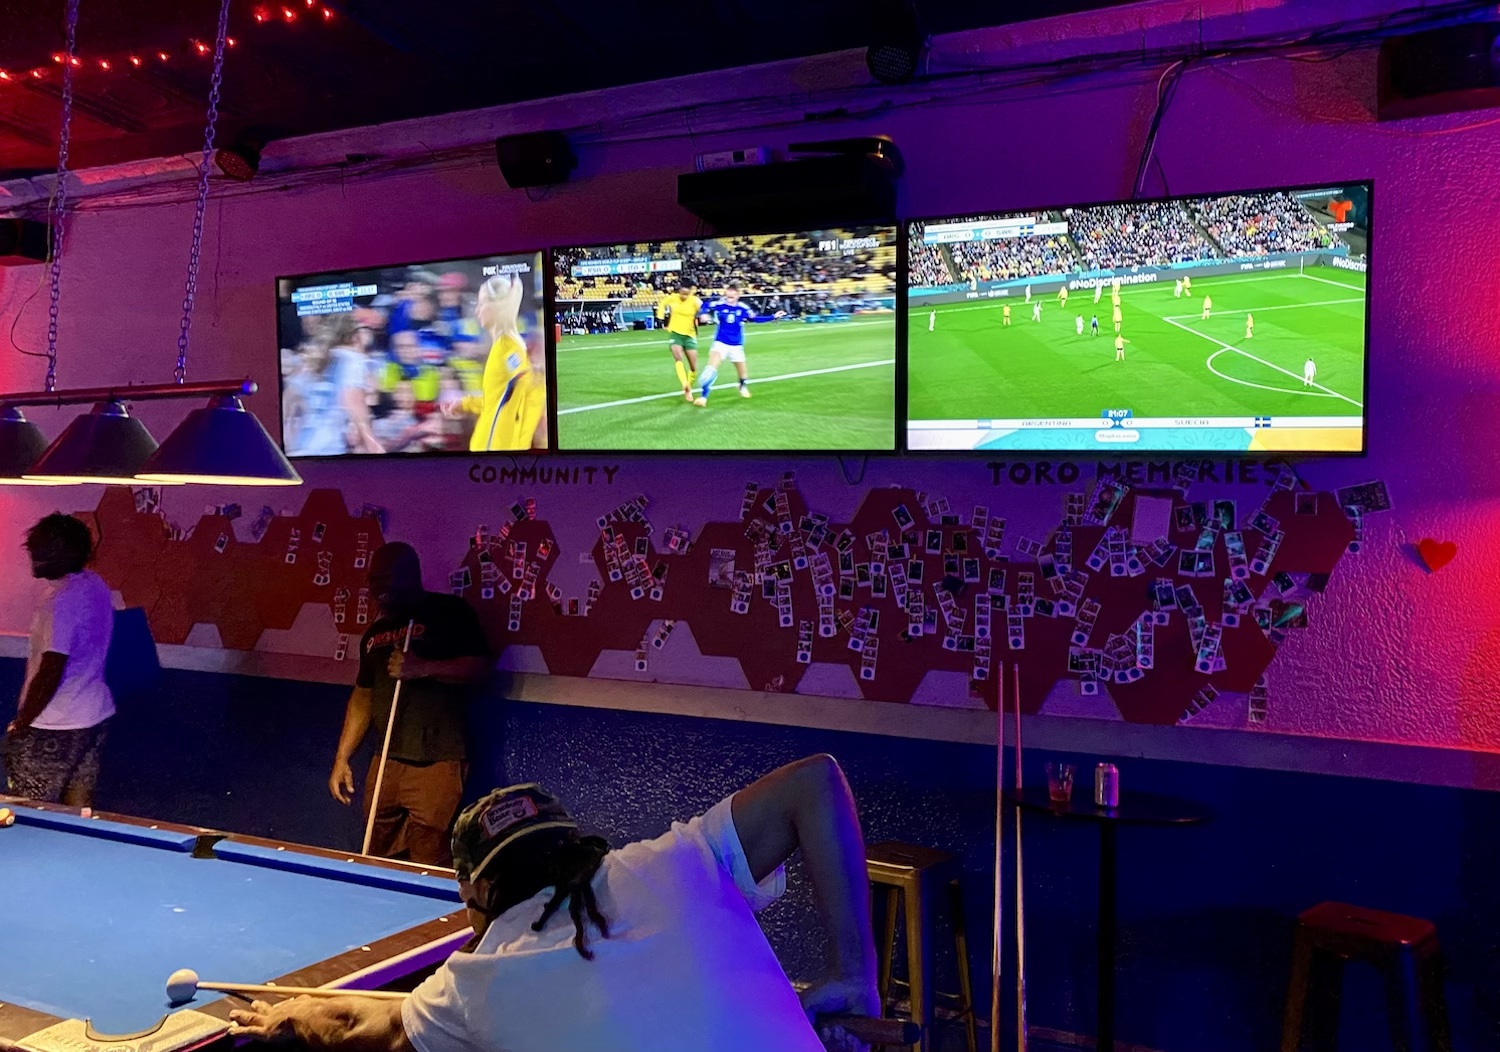 three screens TV in purple-ish lighting at bar